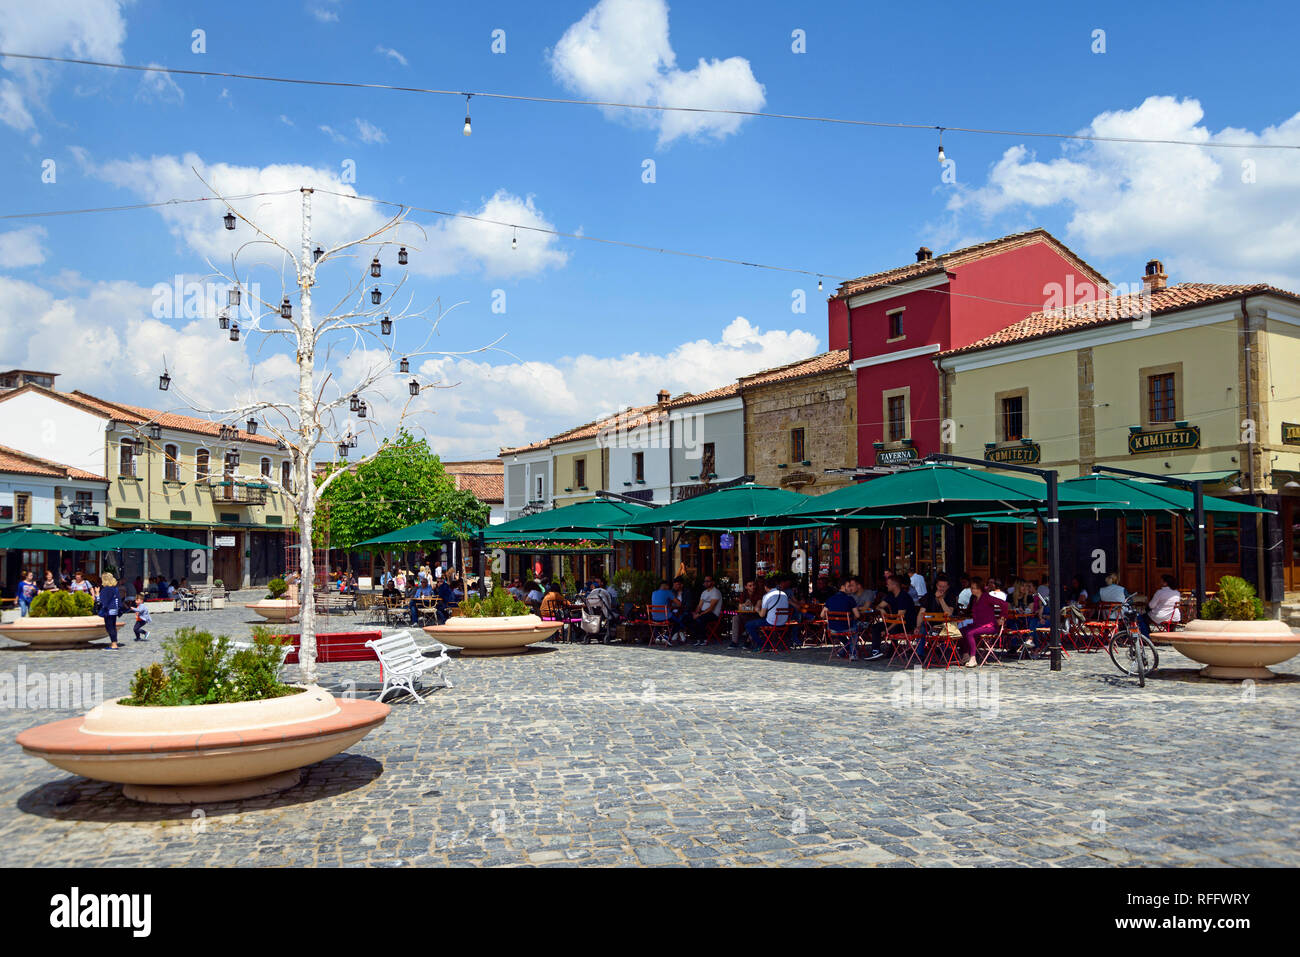 Marketplace, quartiere vecchio bazaar, Pazari i Vjeter, bazar storico distretto, Korca, Albania, Korça Foto Stock